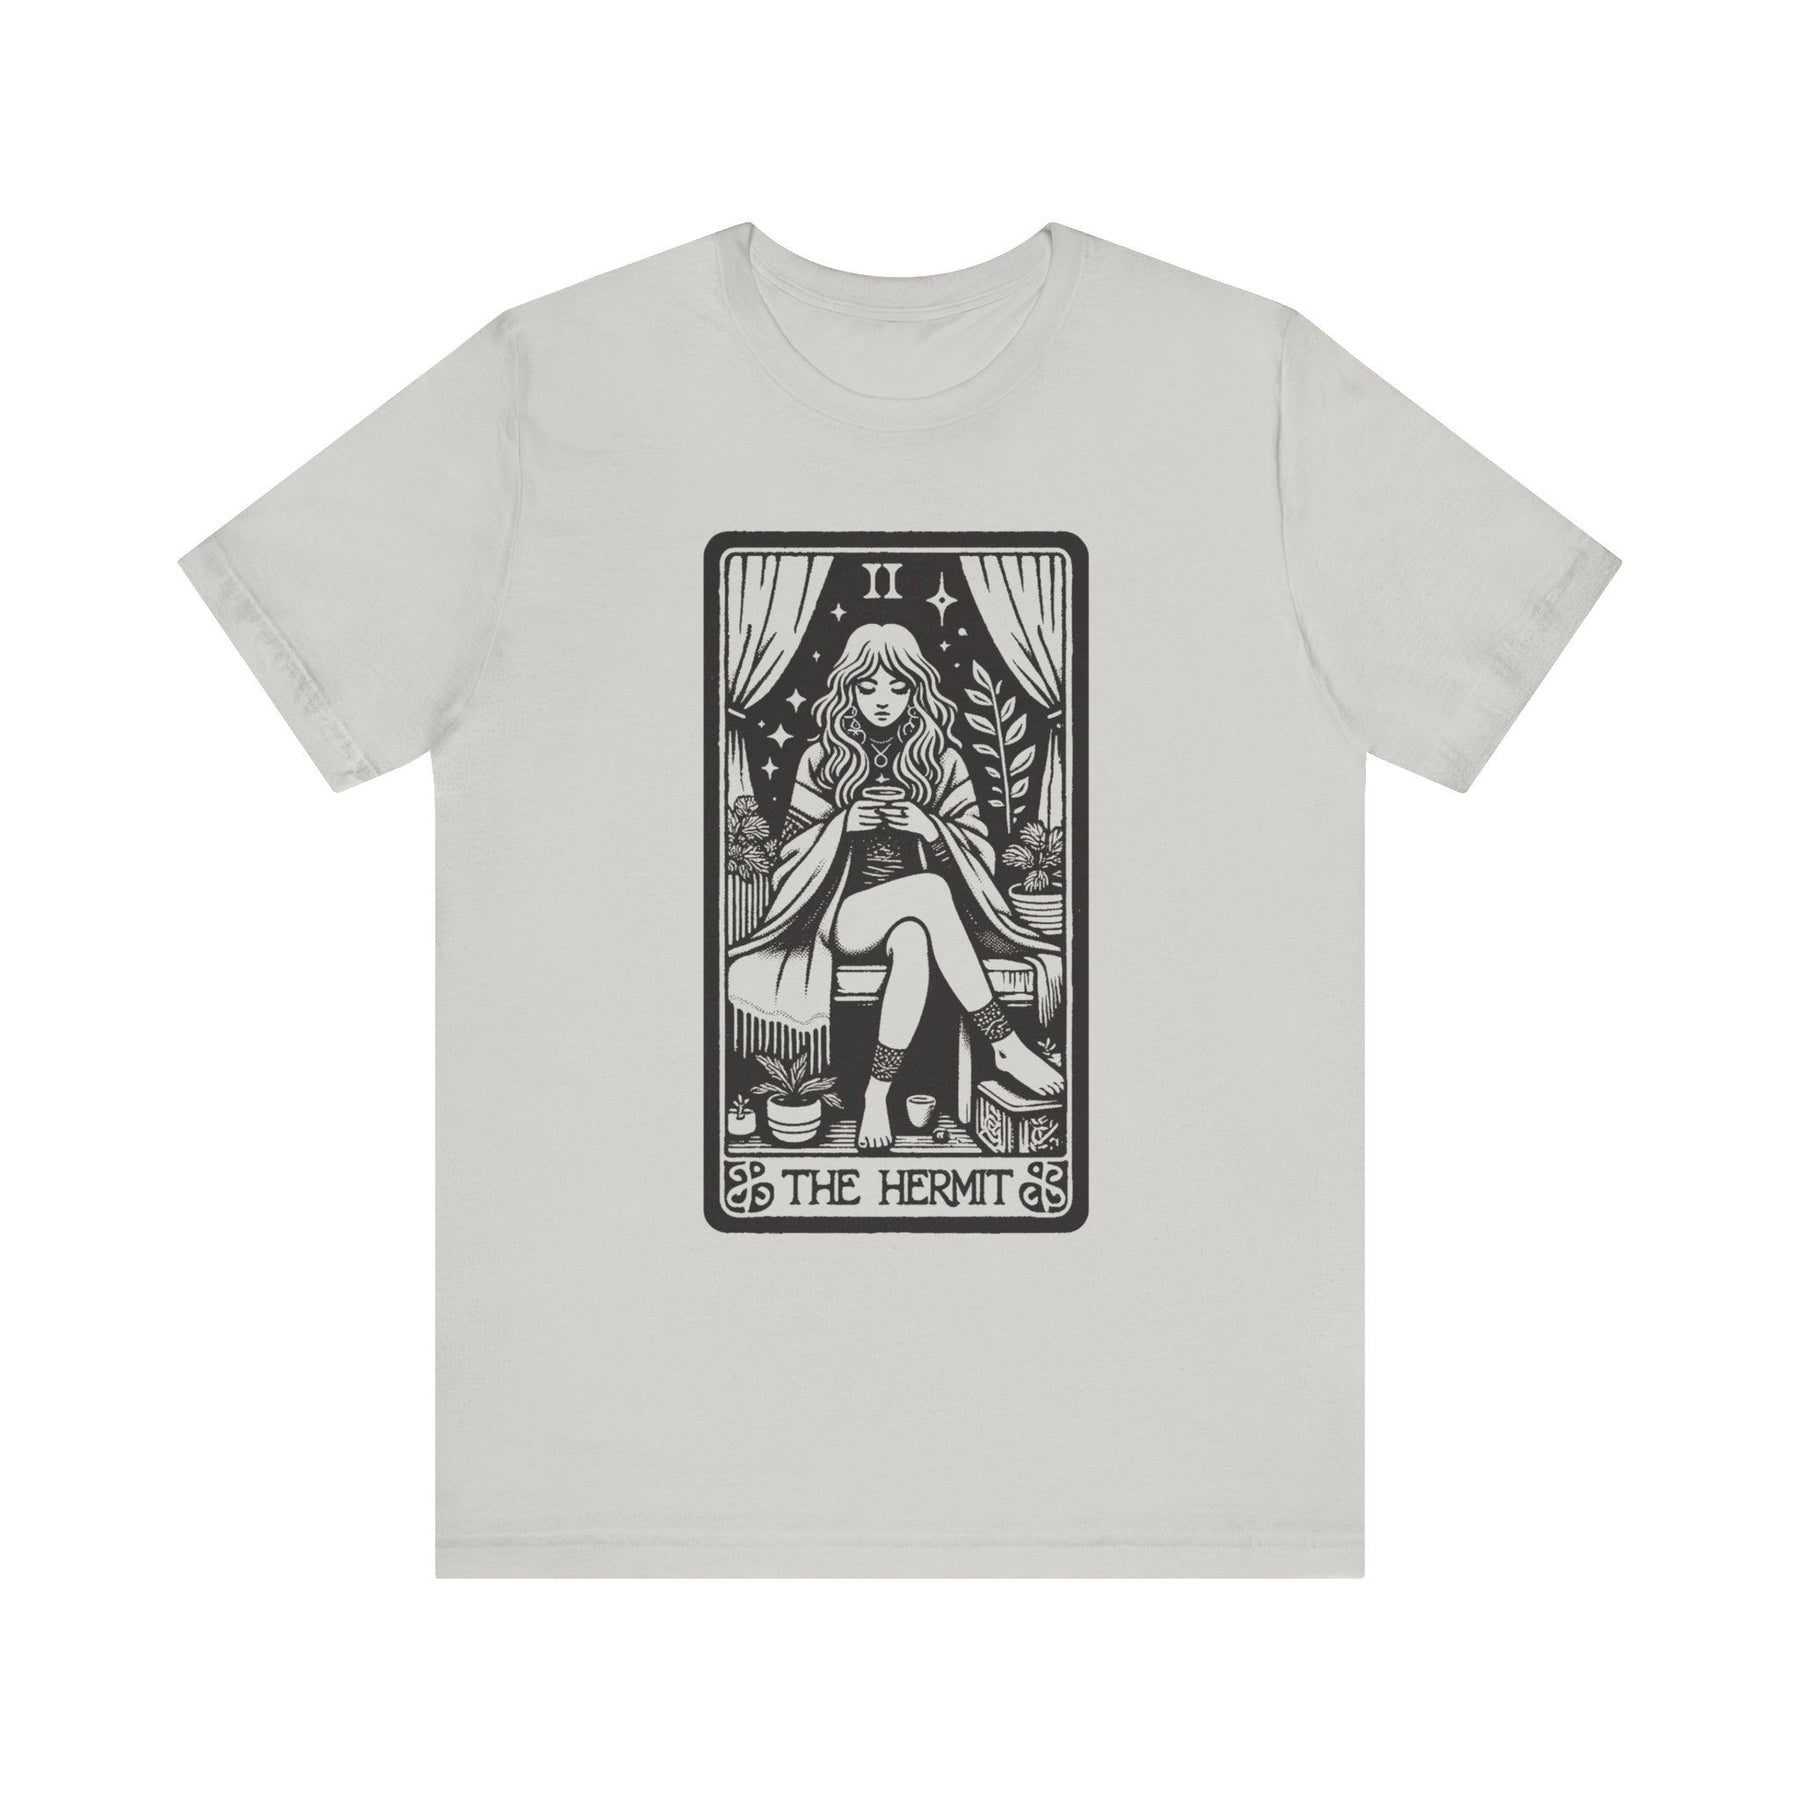 The Hermit Tarot Card Short Sleeve Tee - Goth Cloth Co.T - Shirt25191978464227428188